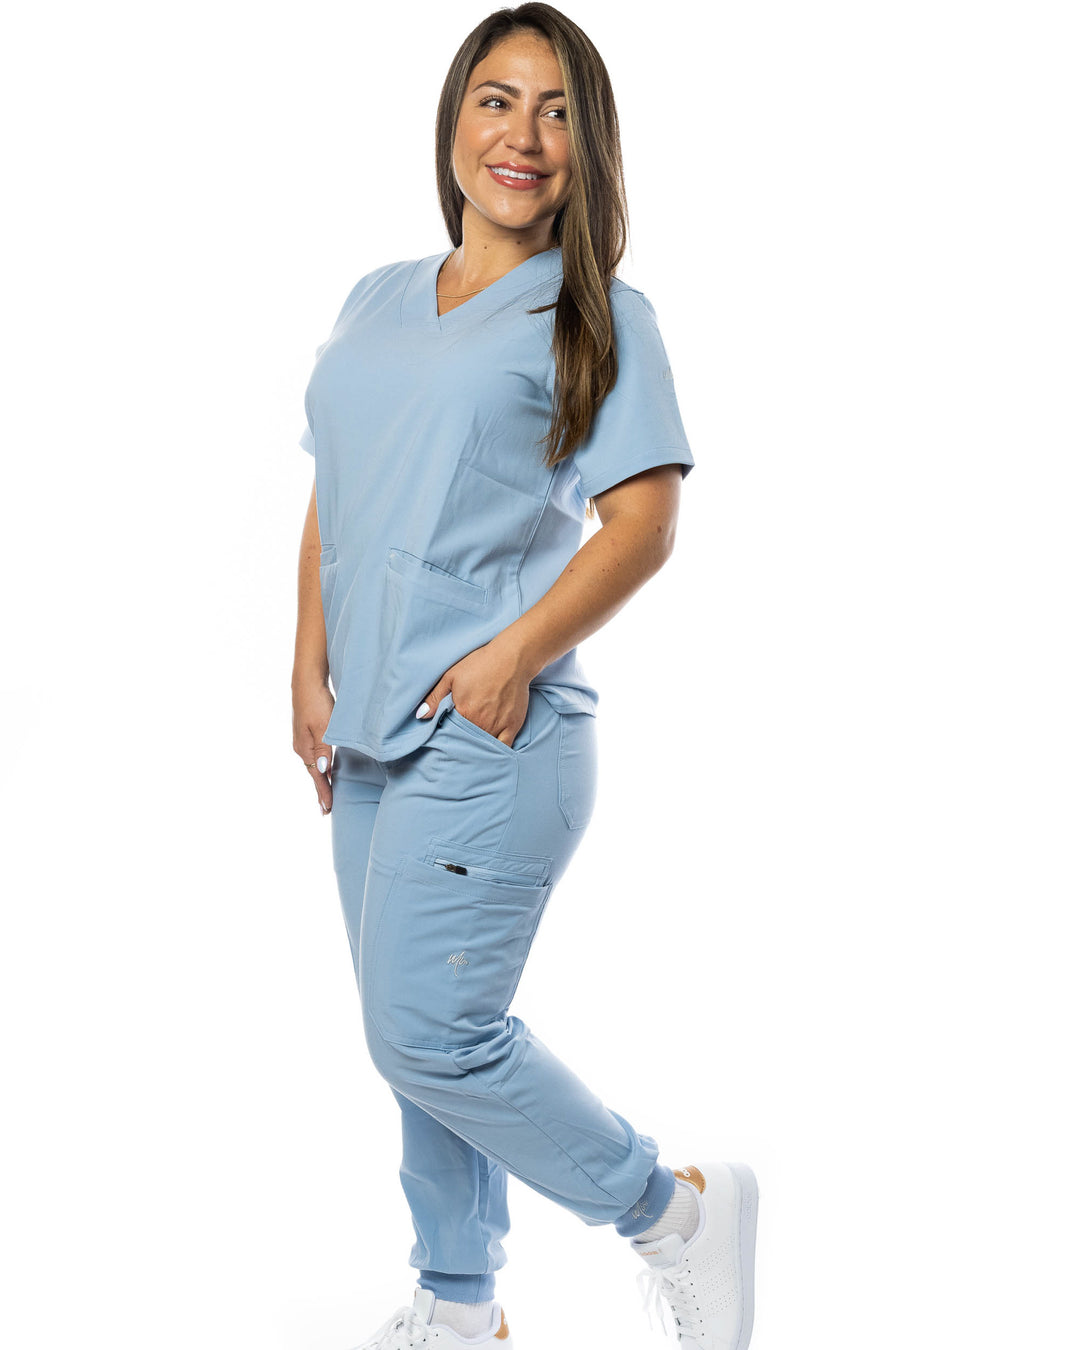 Women's Slate Blue 2 Pocket Scrub Top - Mimscrubs by millennials in Medicine